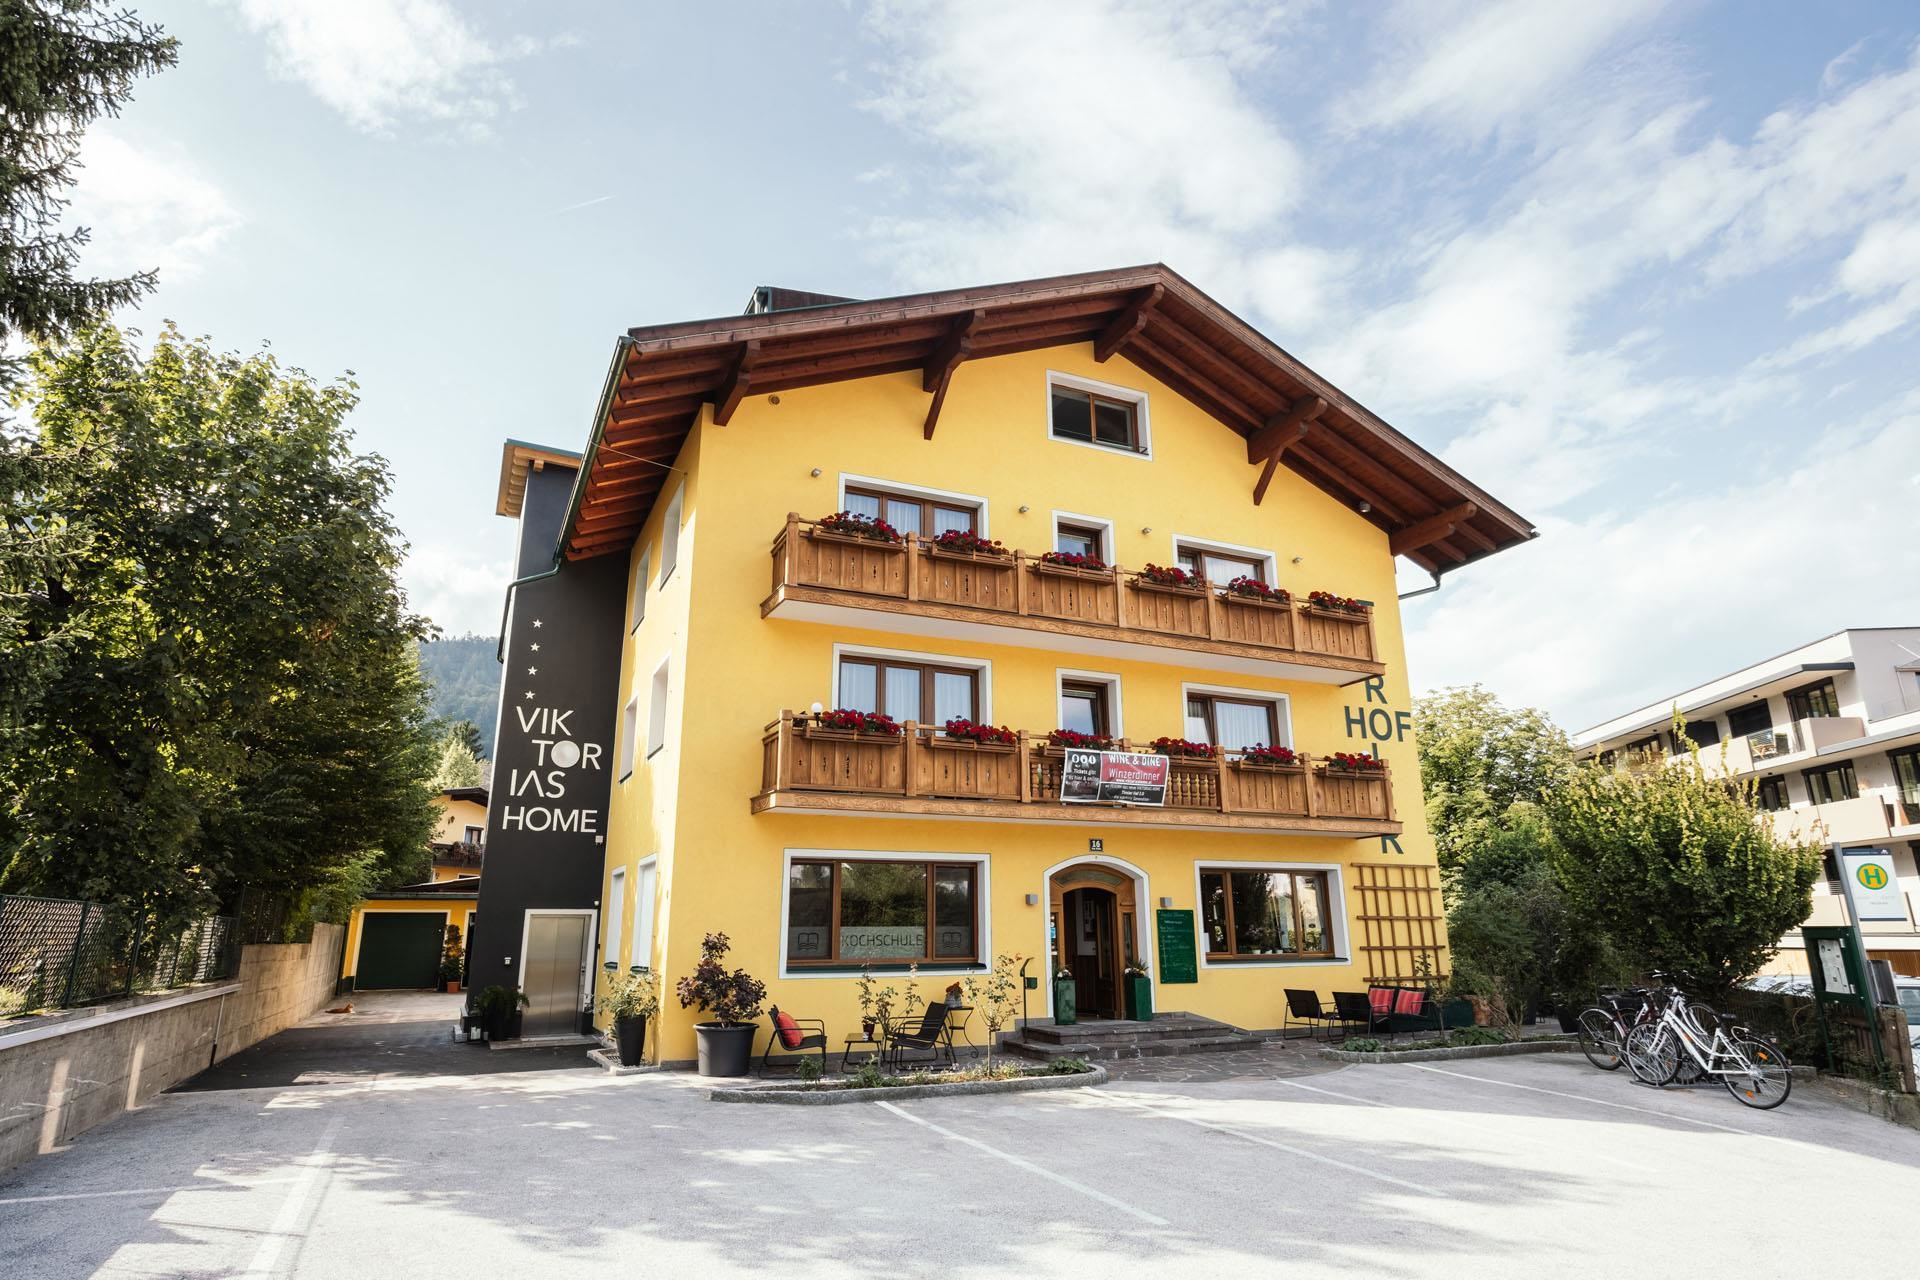 Gourmet Tavern Tiroler Hof